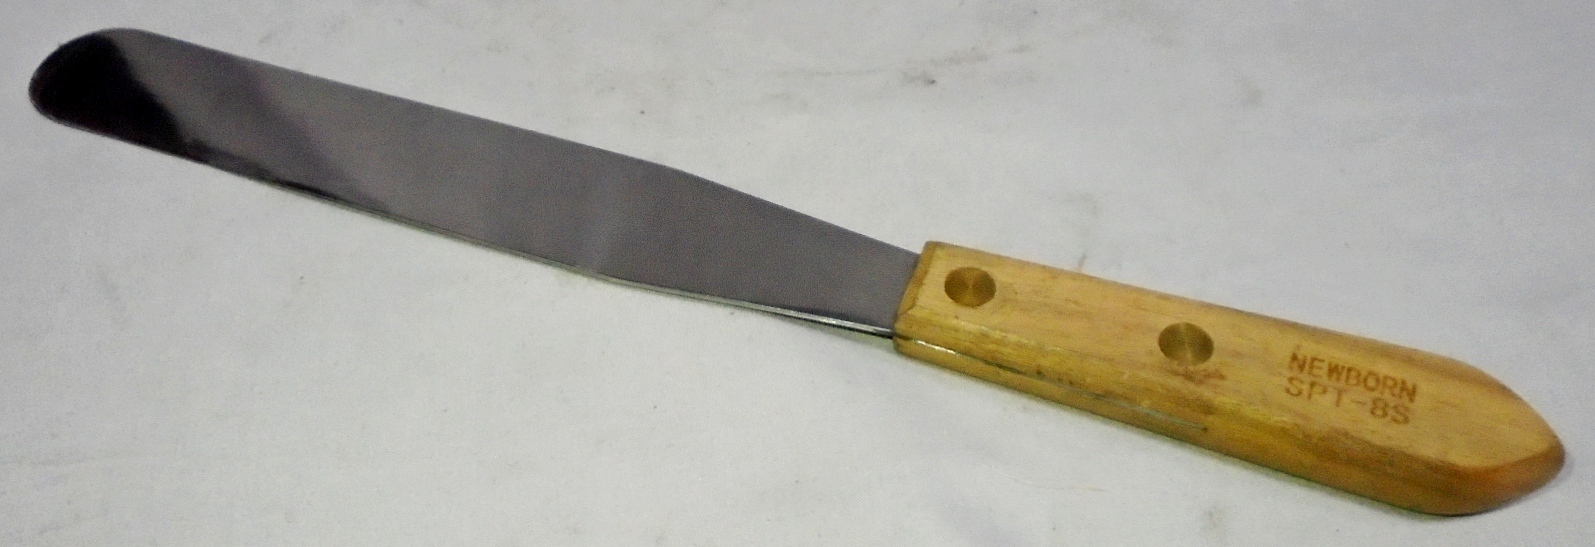 Newborn Caulk Finishing Knife Tool, Stainless Steel with Wood Handle, 8 L  x 1/4 W - 8519008